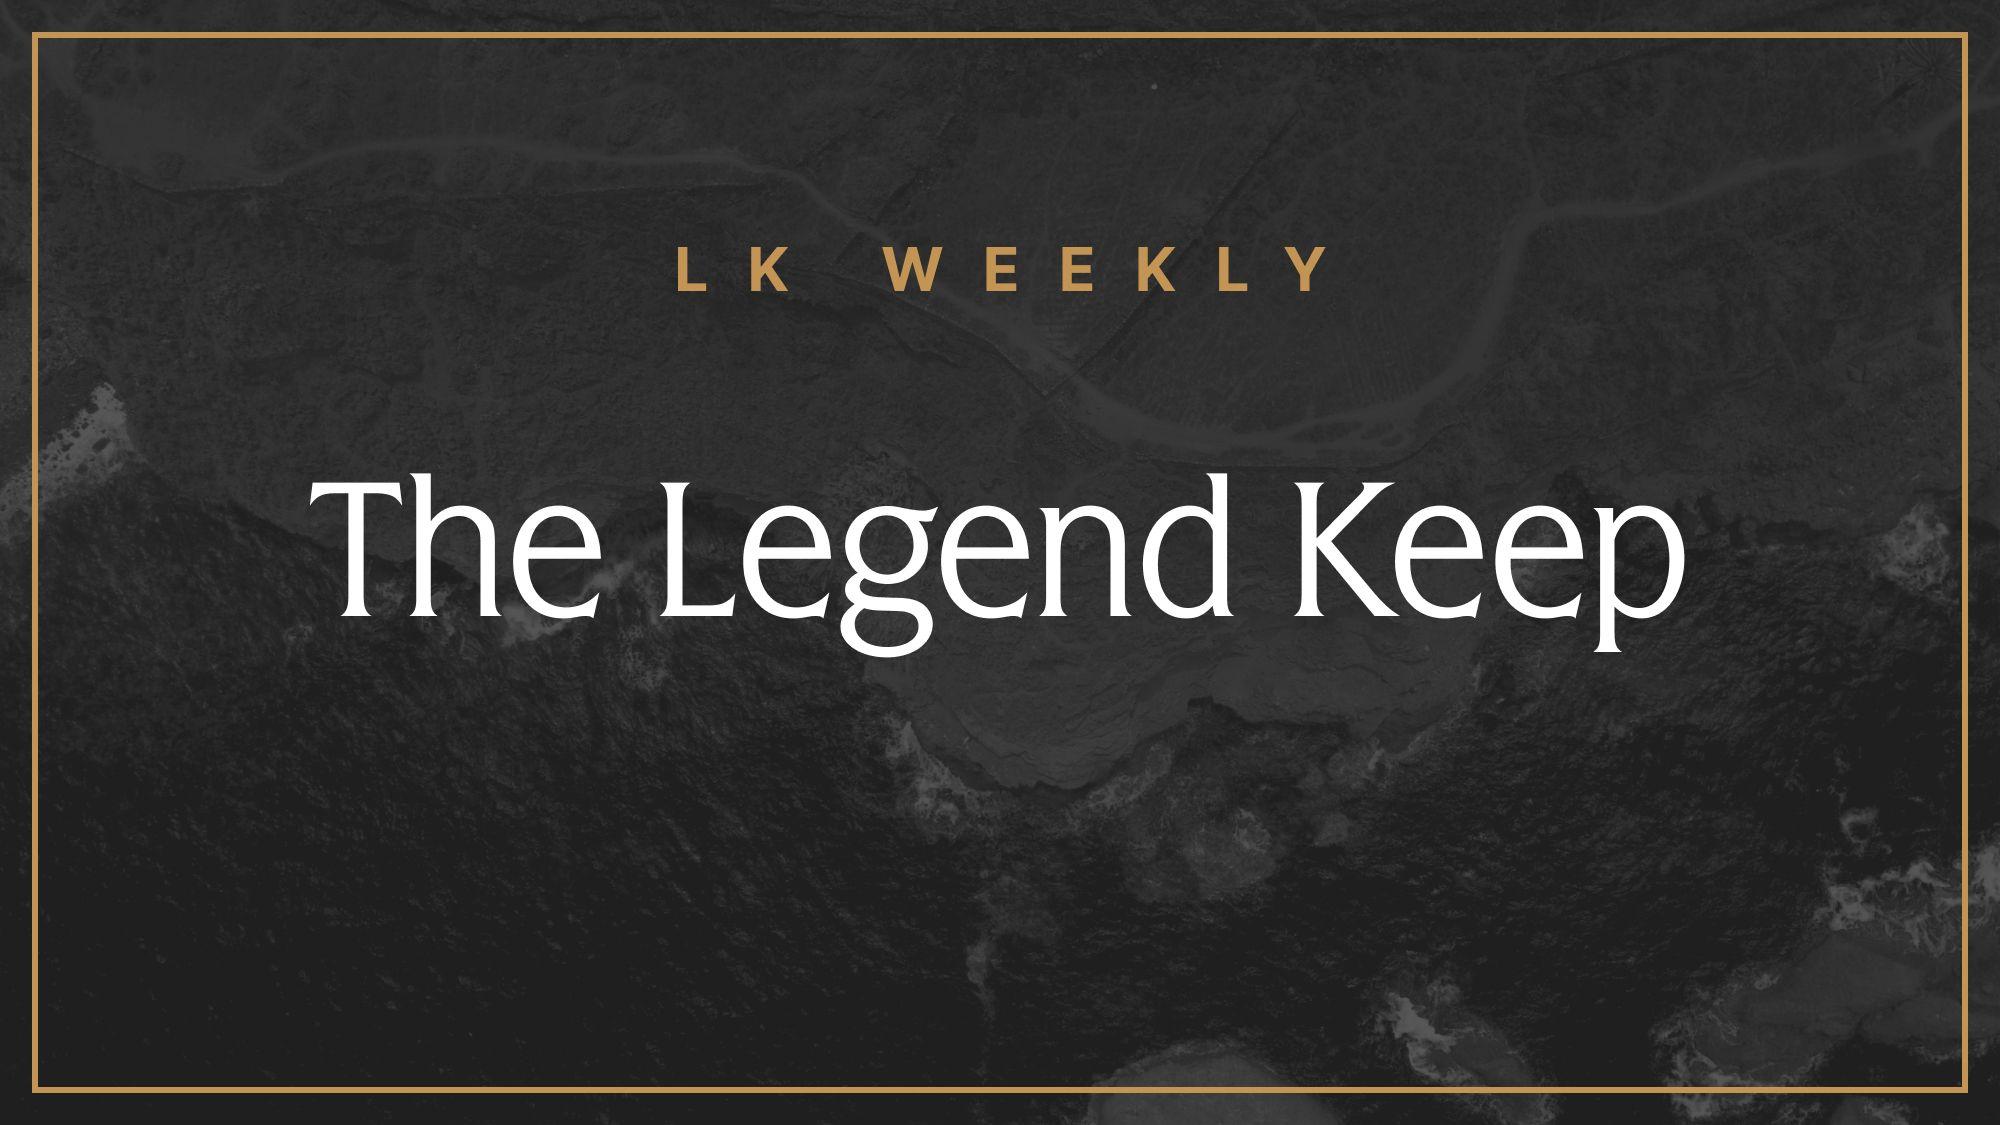 LK Weekly: The Legend Keep